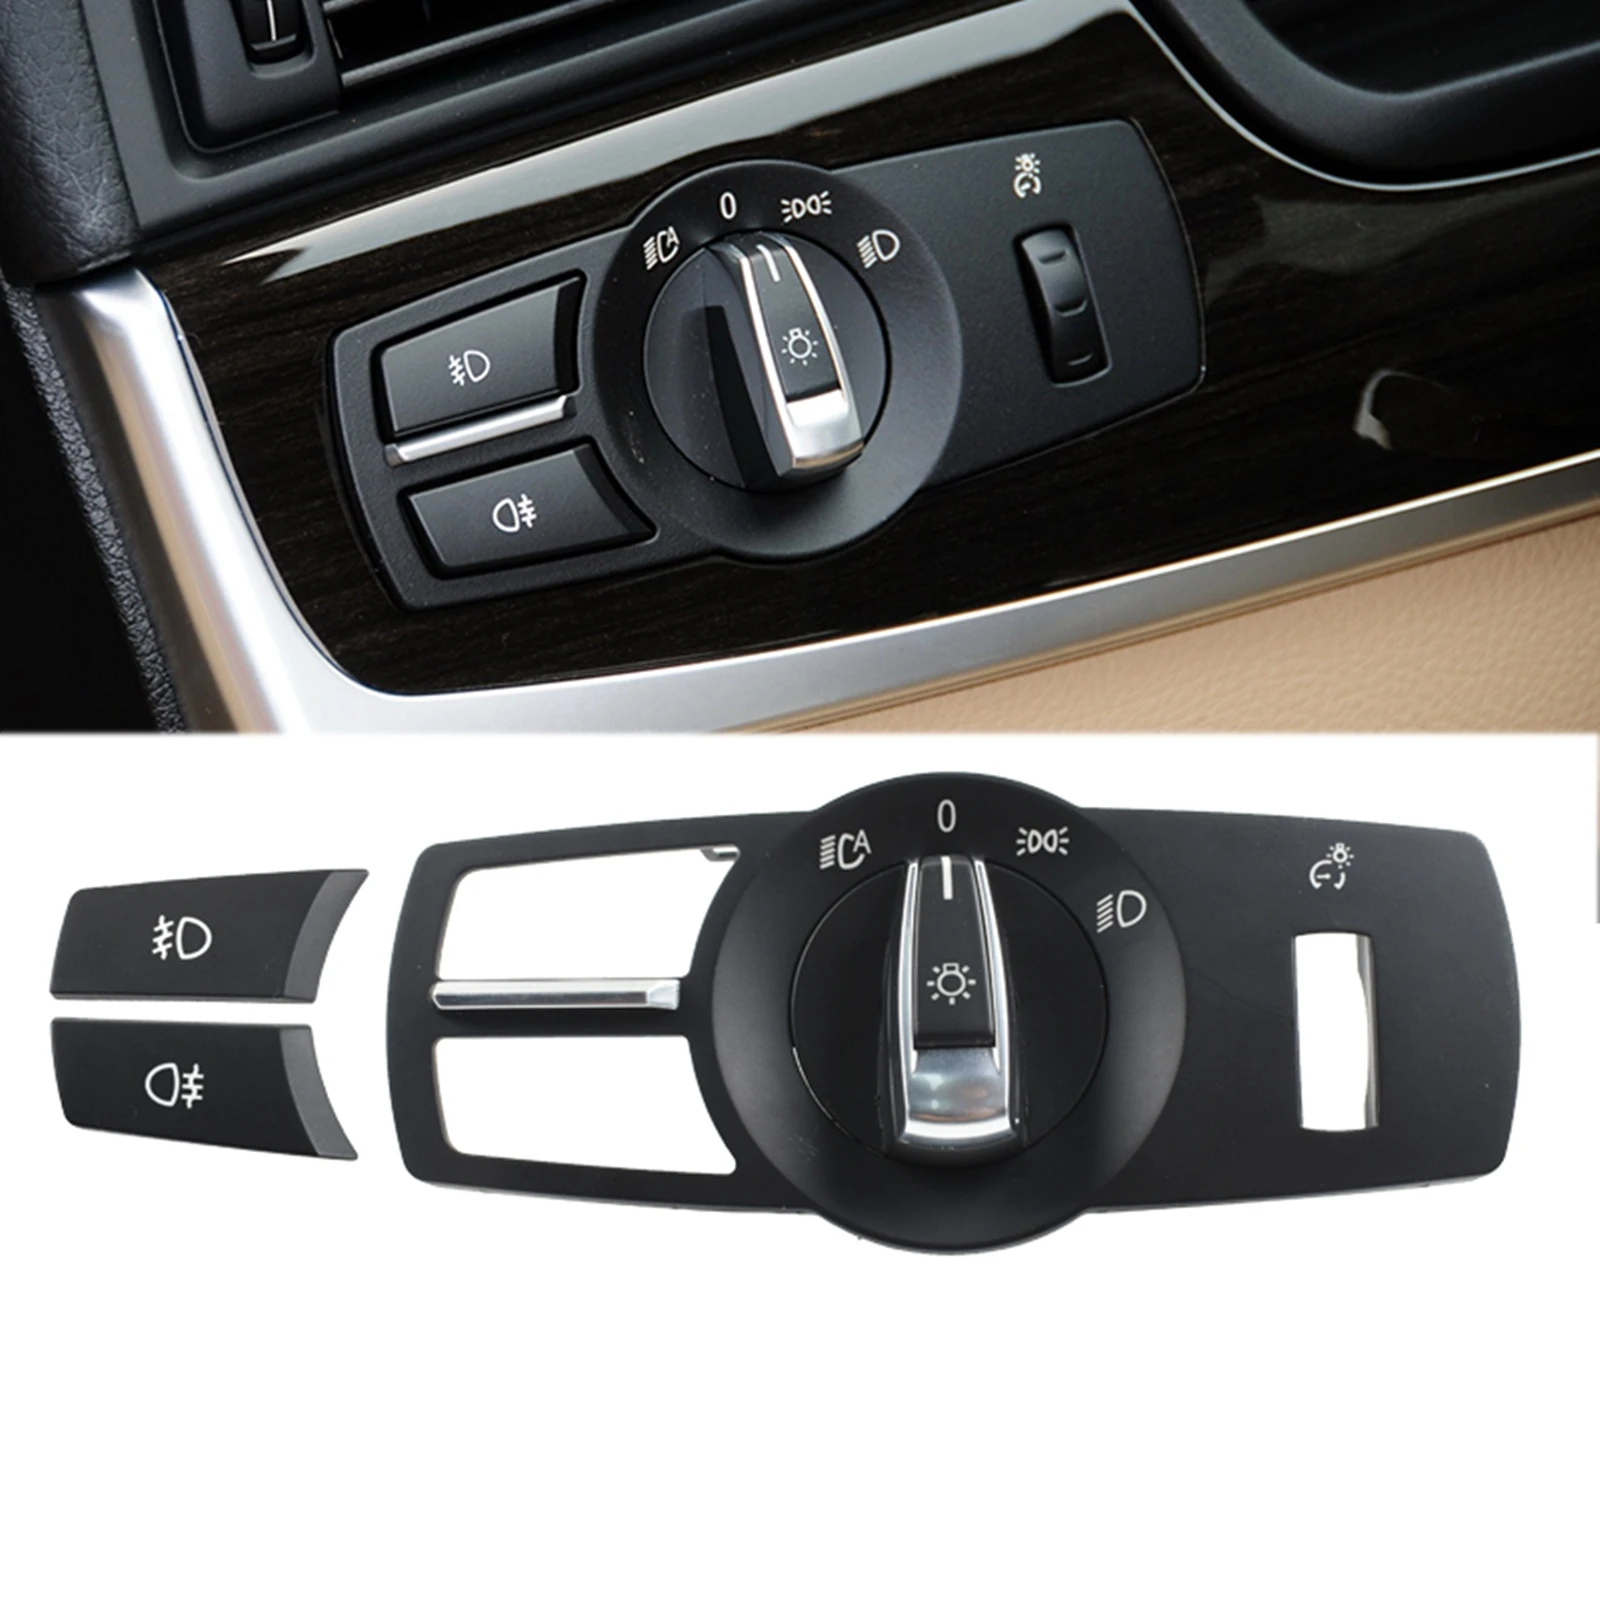 

4pcs/Set Kit For BMW 5 Series GT 535 Advance Version Car Headlight Headlamp Control Switch Panel+Button+Key Knob Black